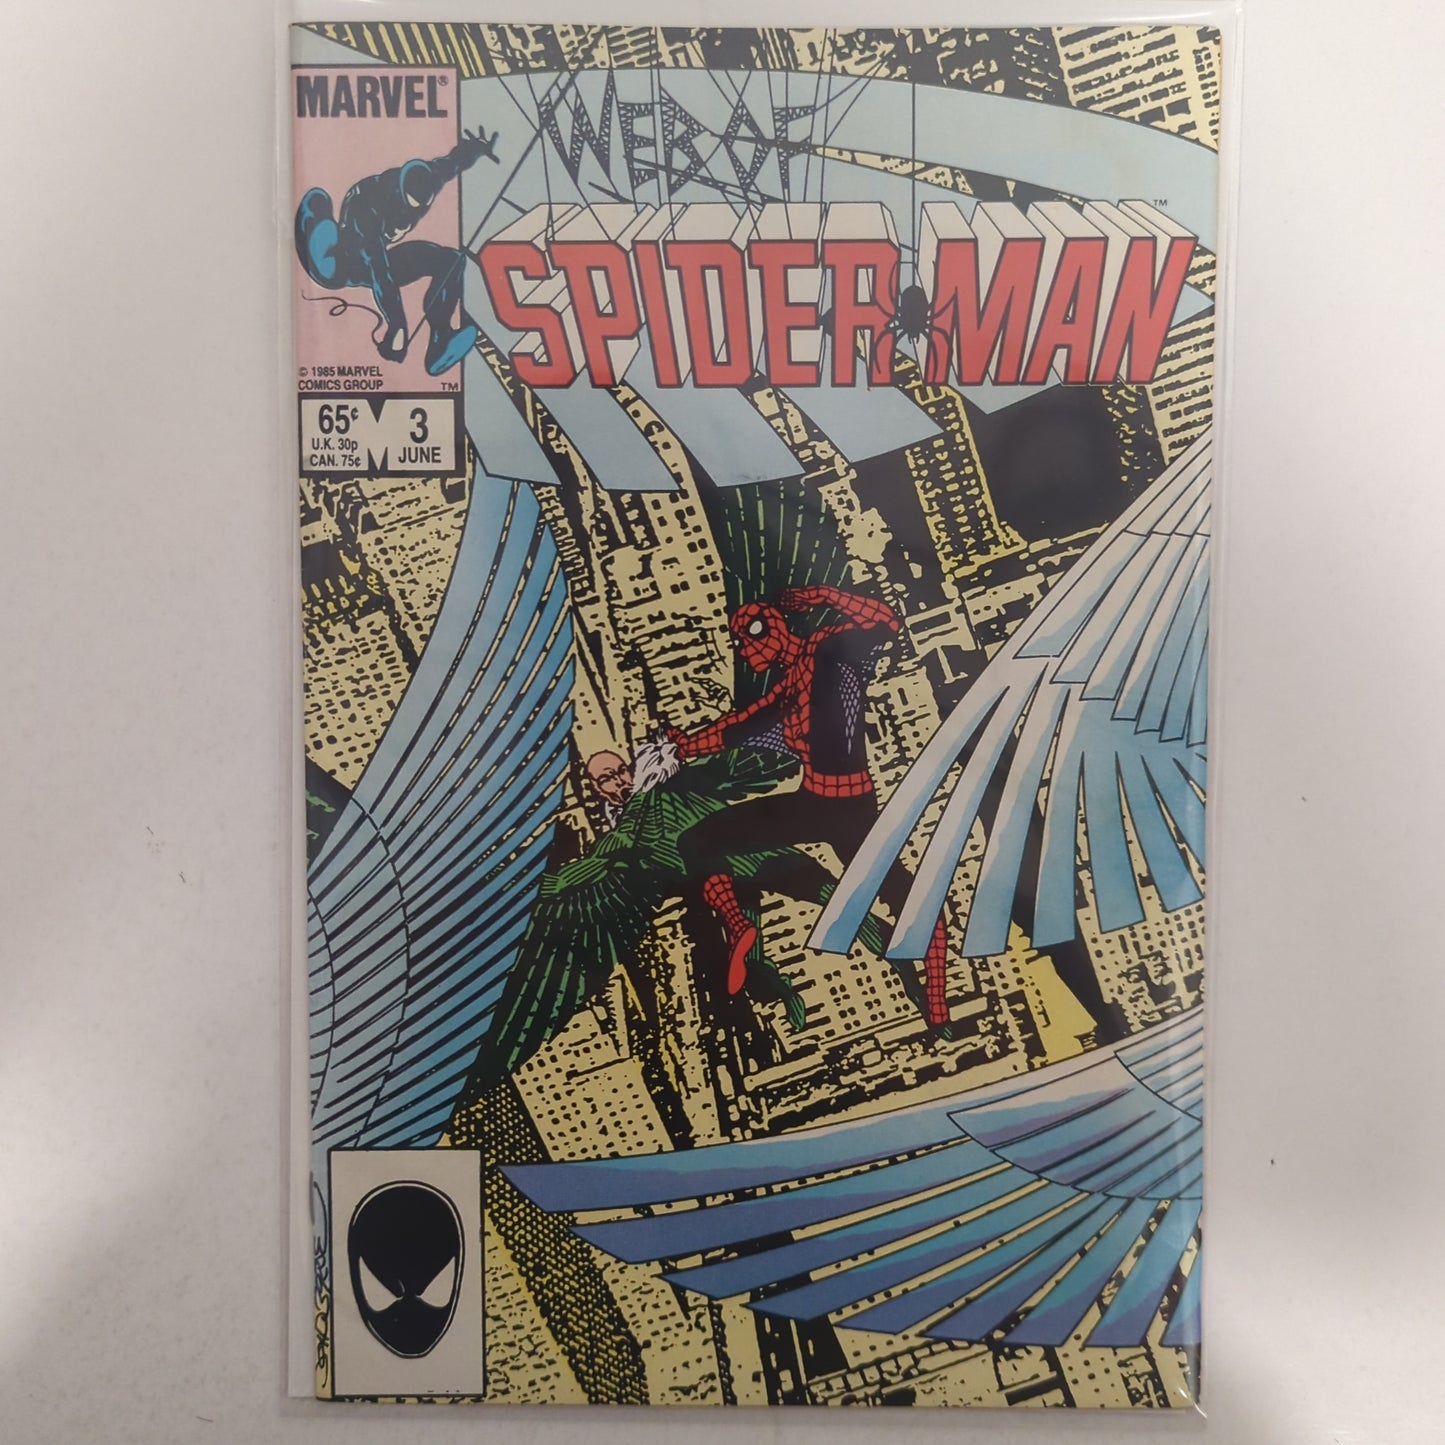 Web of Spider-Man #3